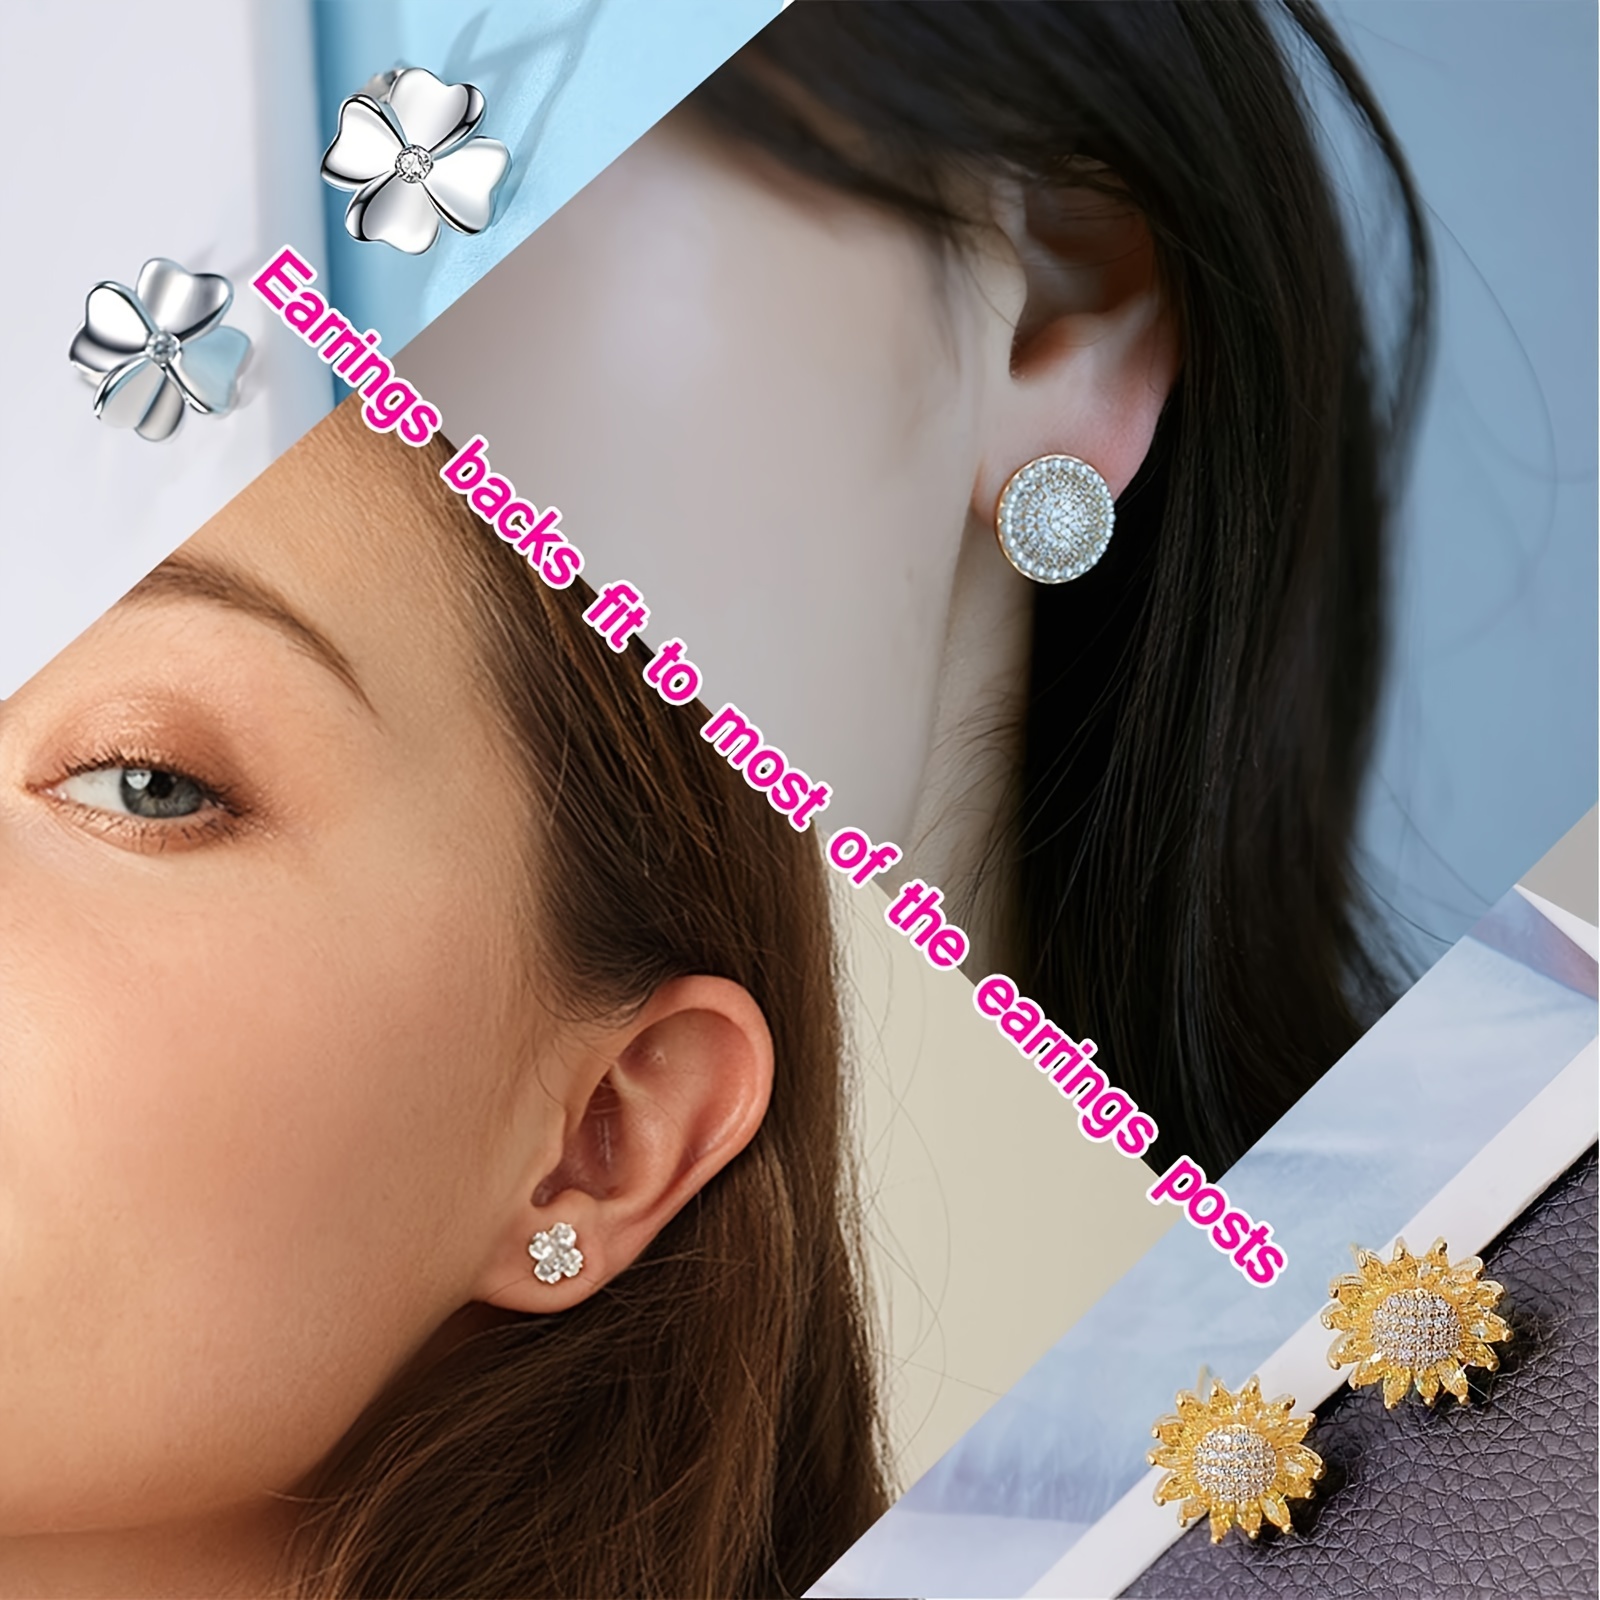  Didiseaon 1200 Pcs Flat Pad Earring Studs for Women